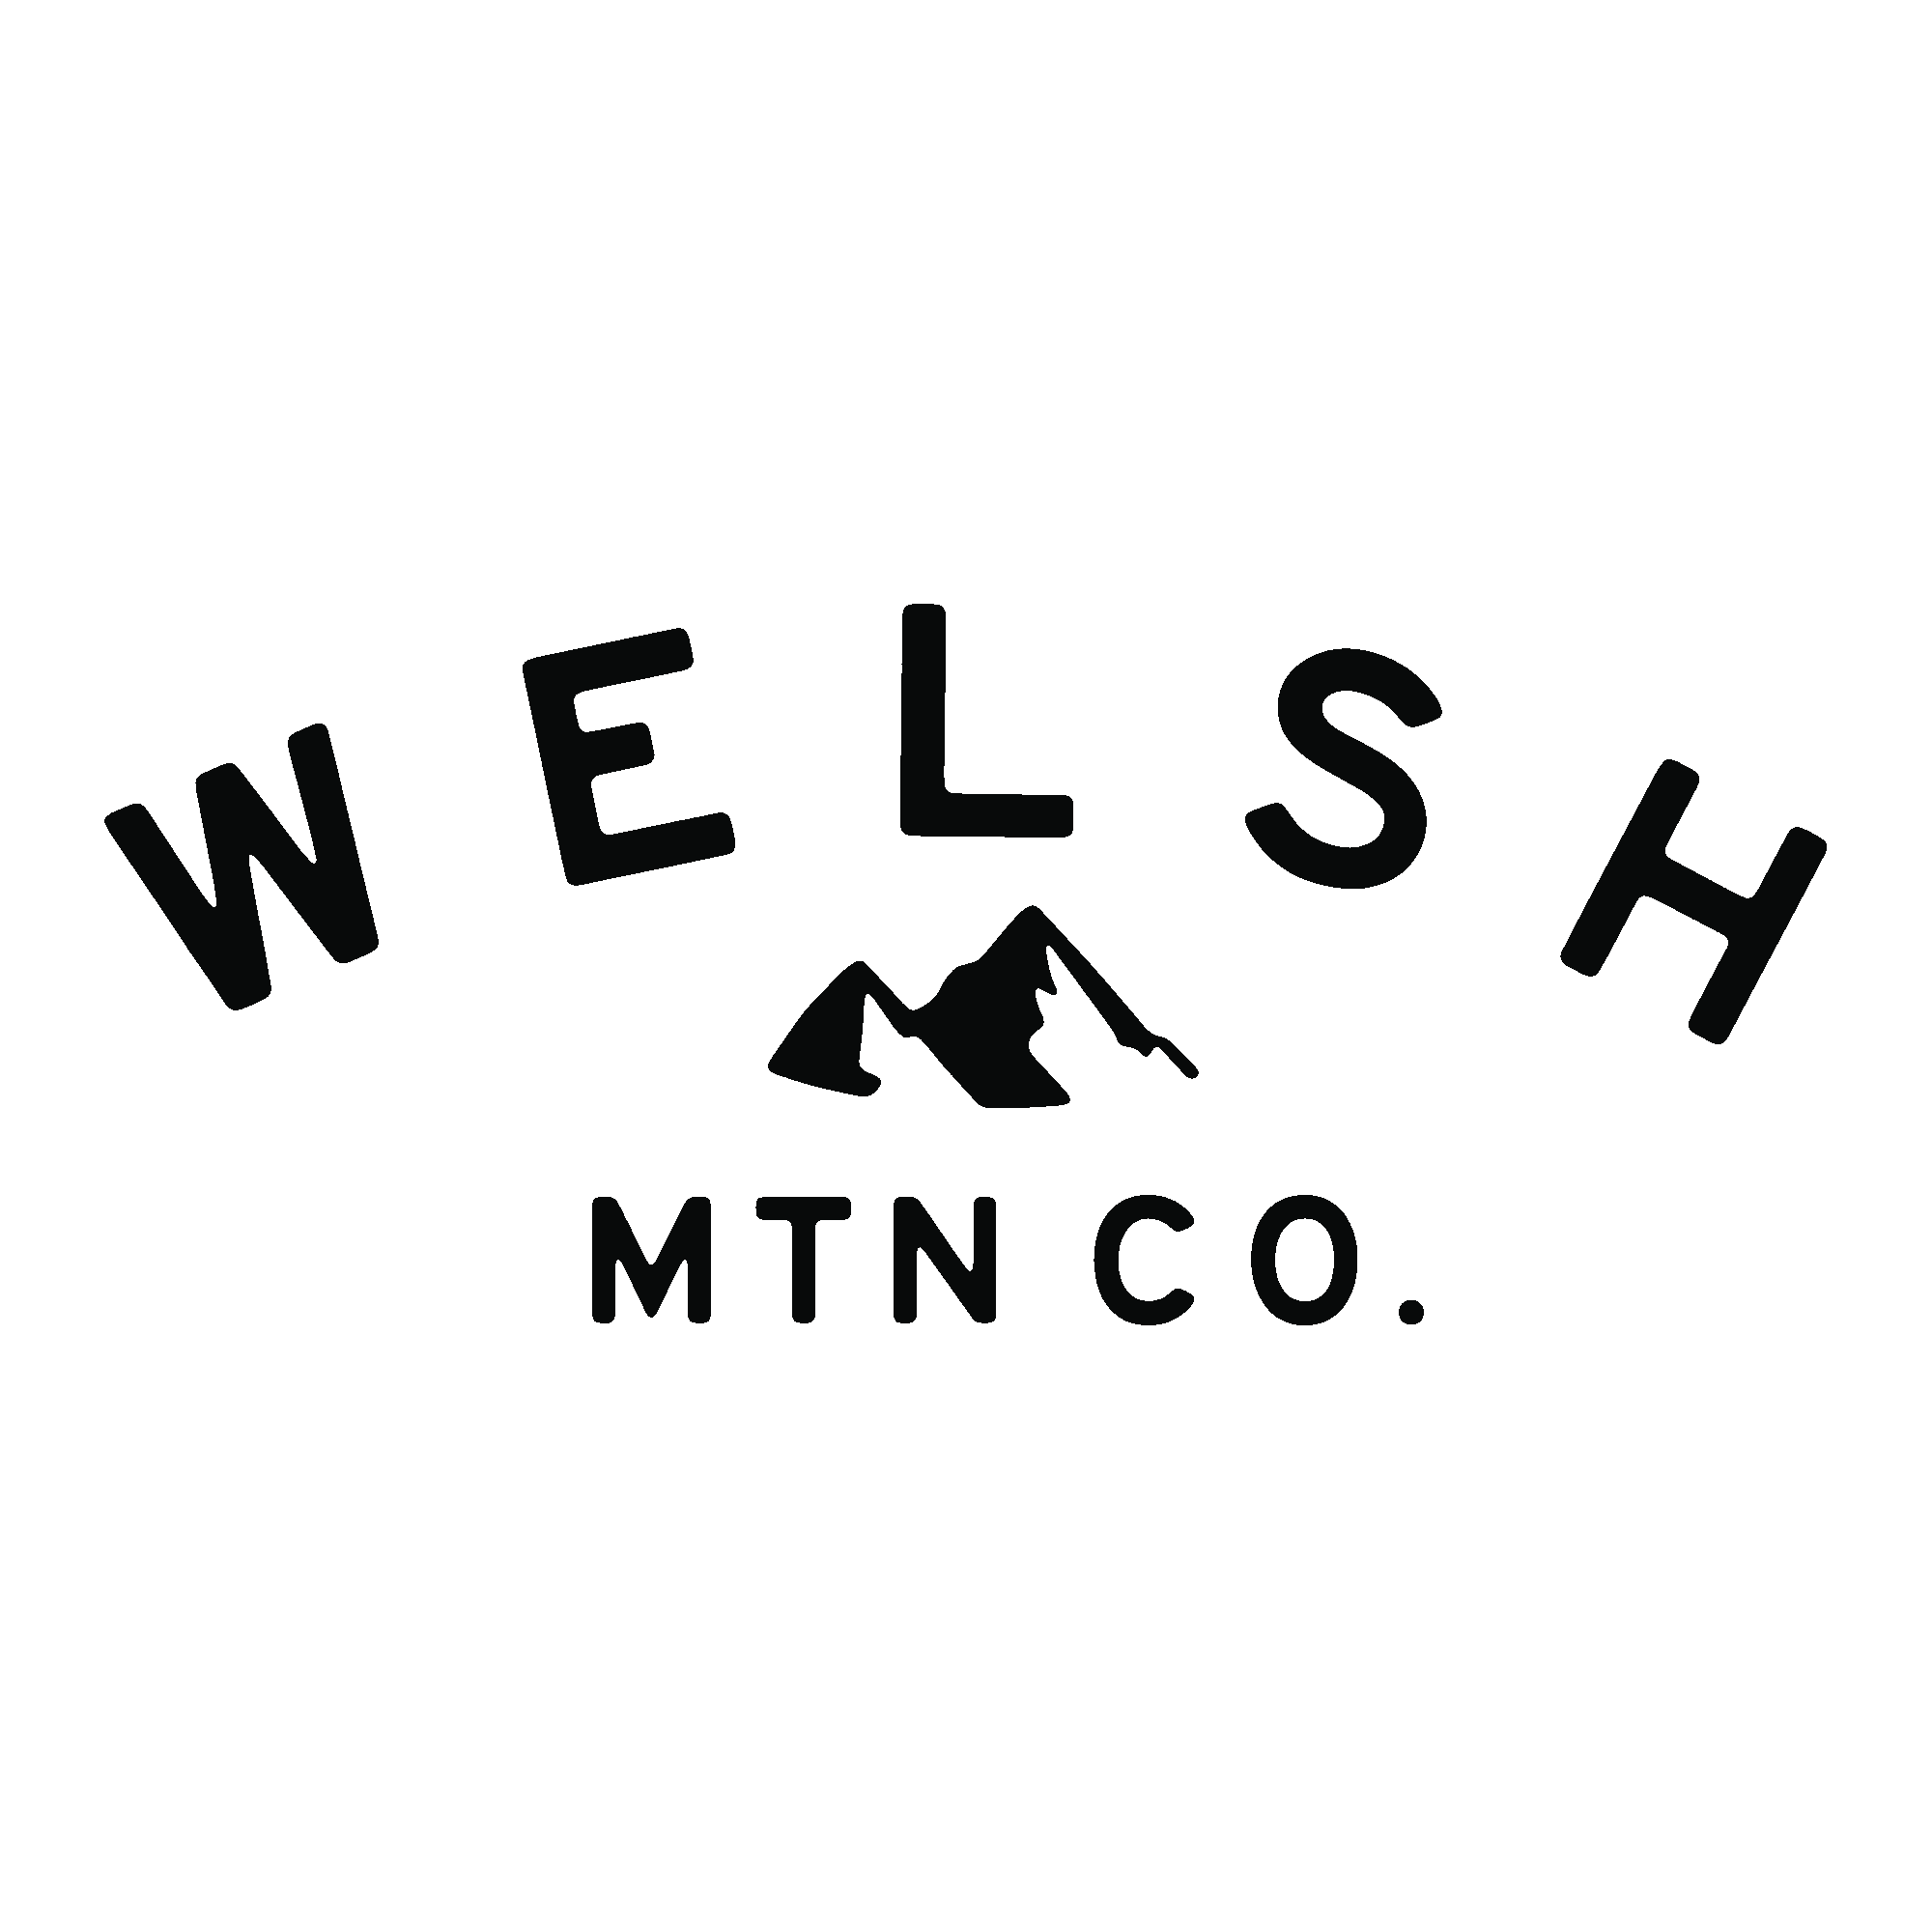 Welsh Mnt Co's logo